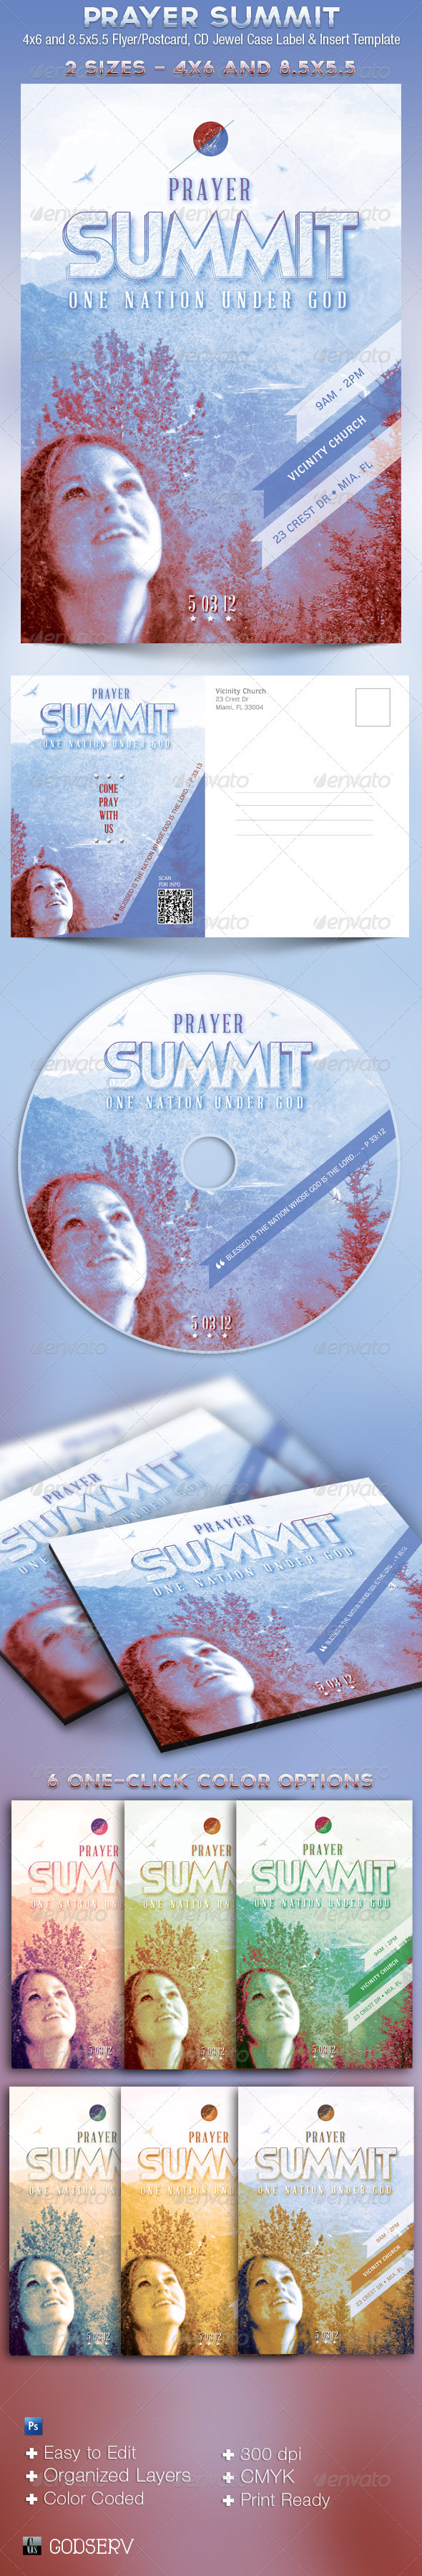 Prayer Summit Flyer, Postcard and CD Template